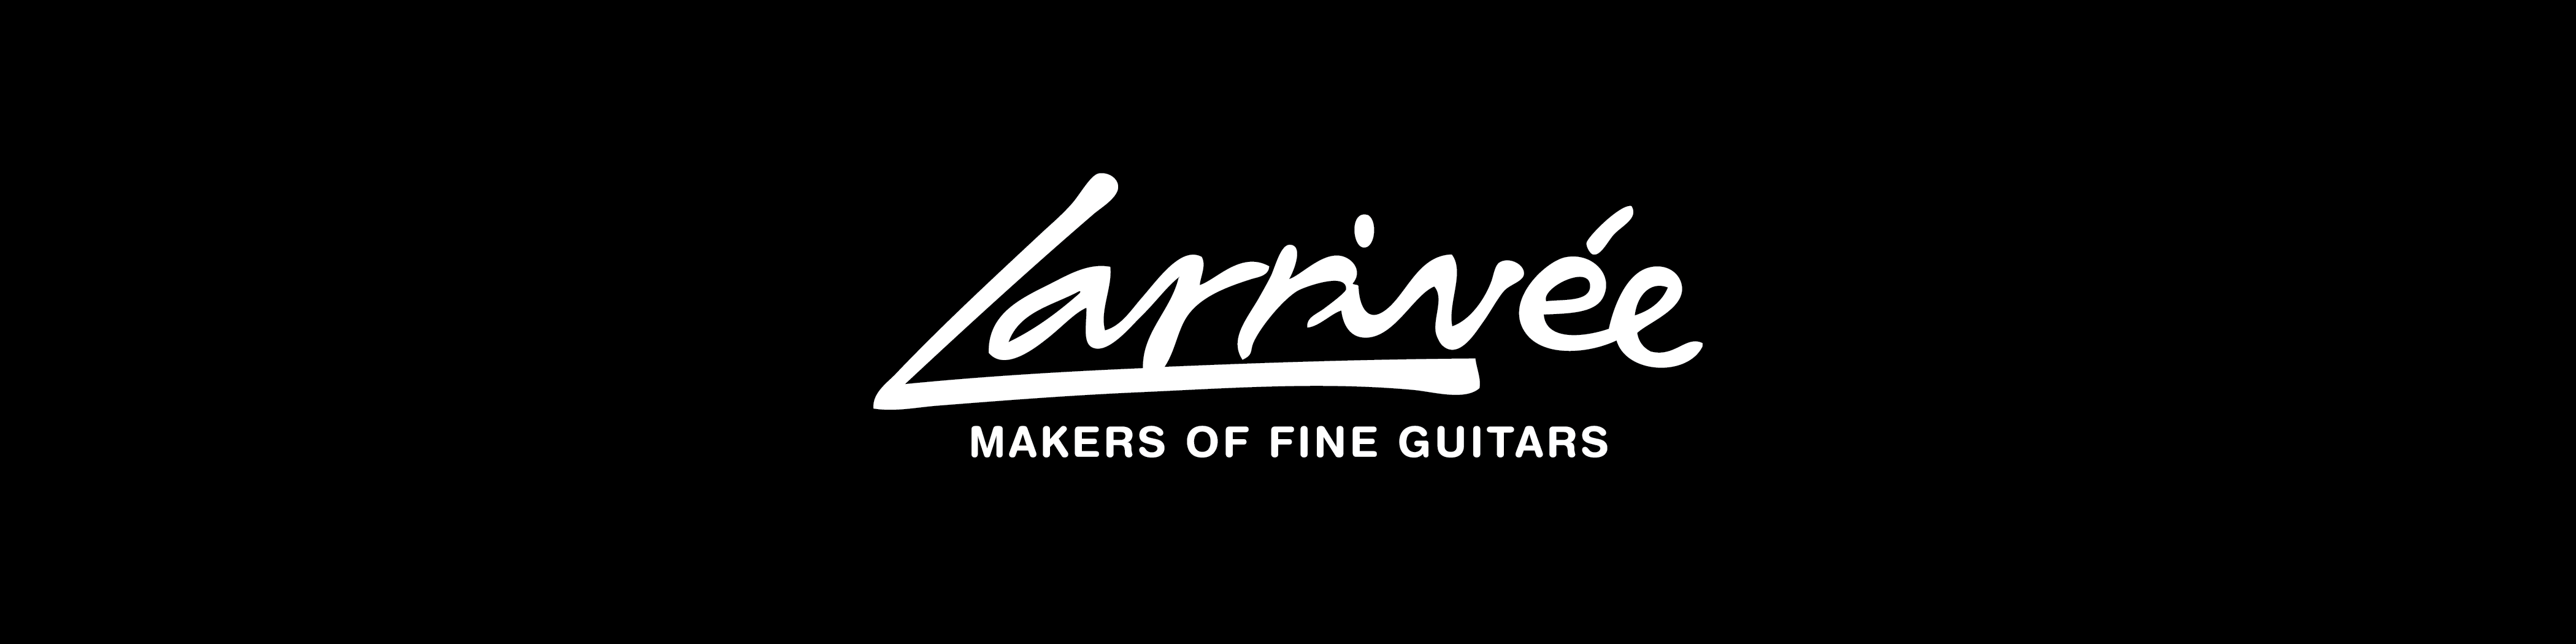 Acoustic Guitar Brands For Sale